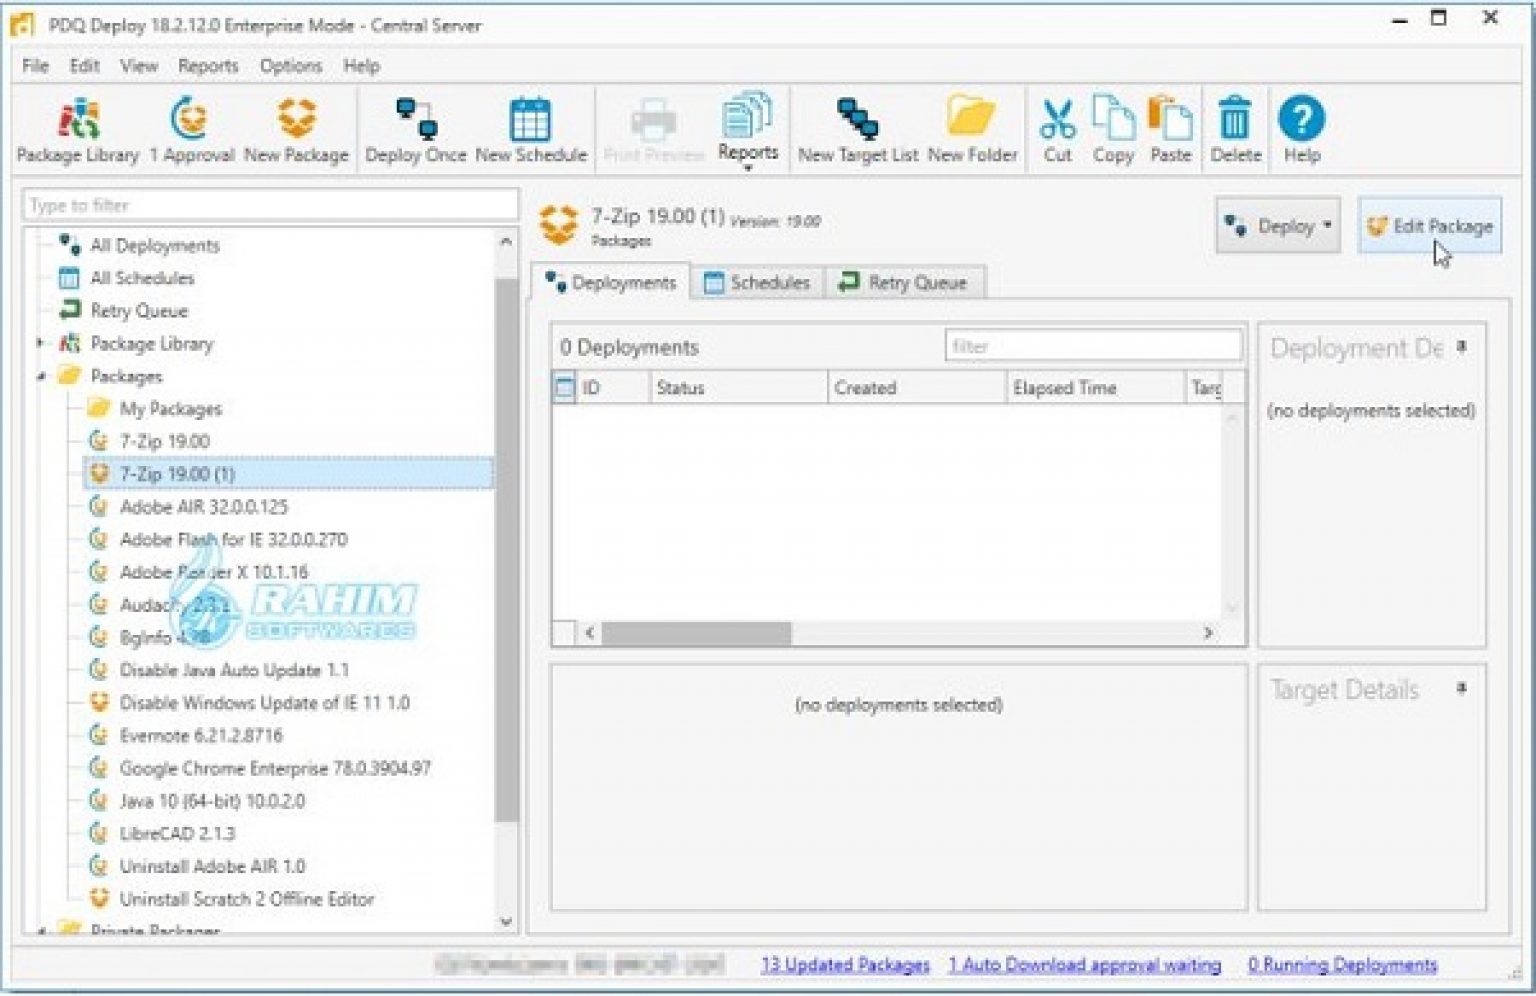 PDQ Inventory Enterprise 19.3.472.0 download the last version for windows